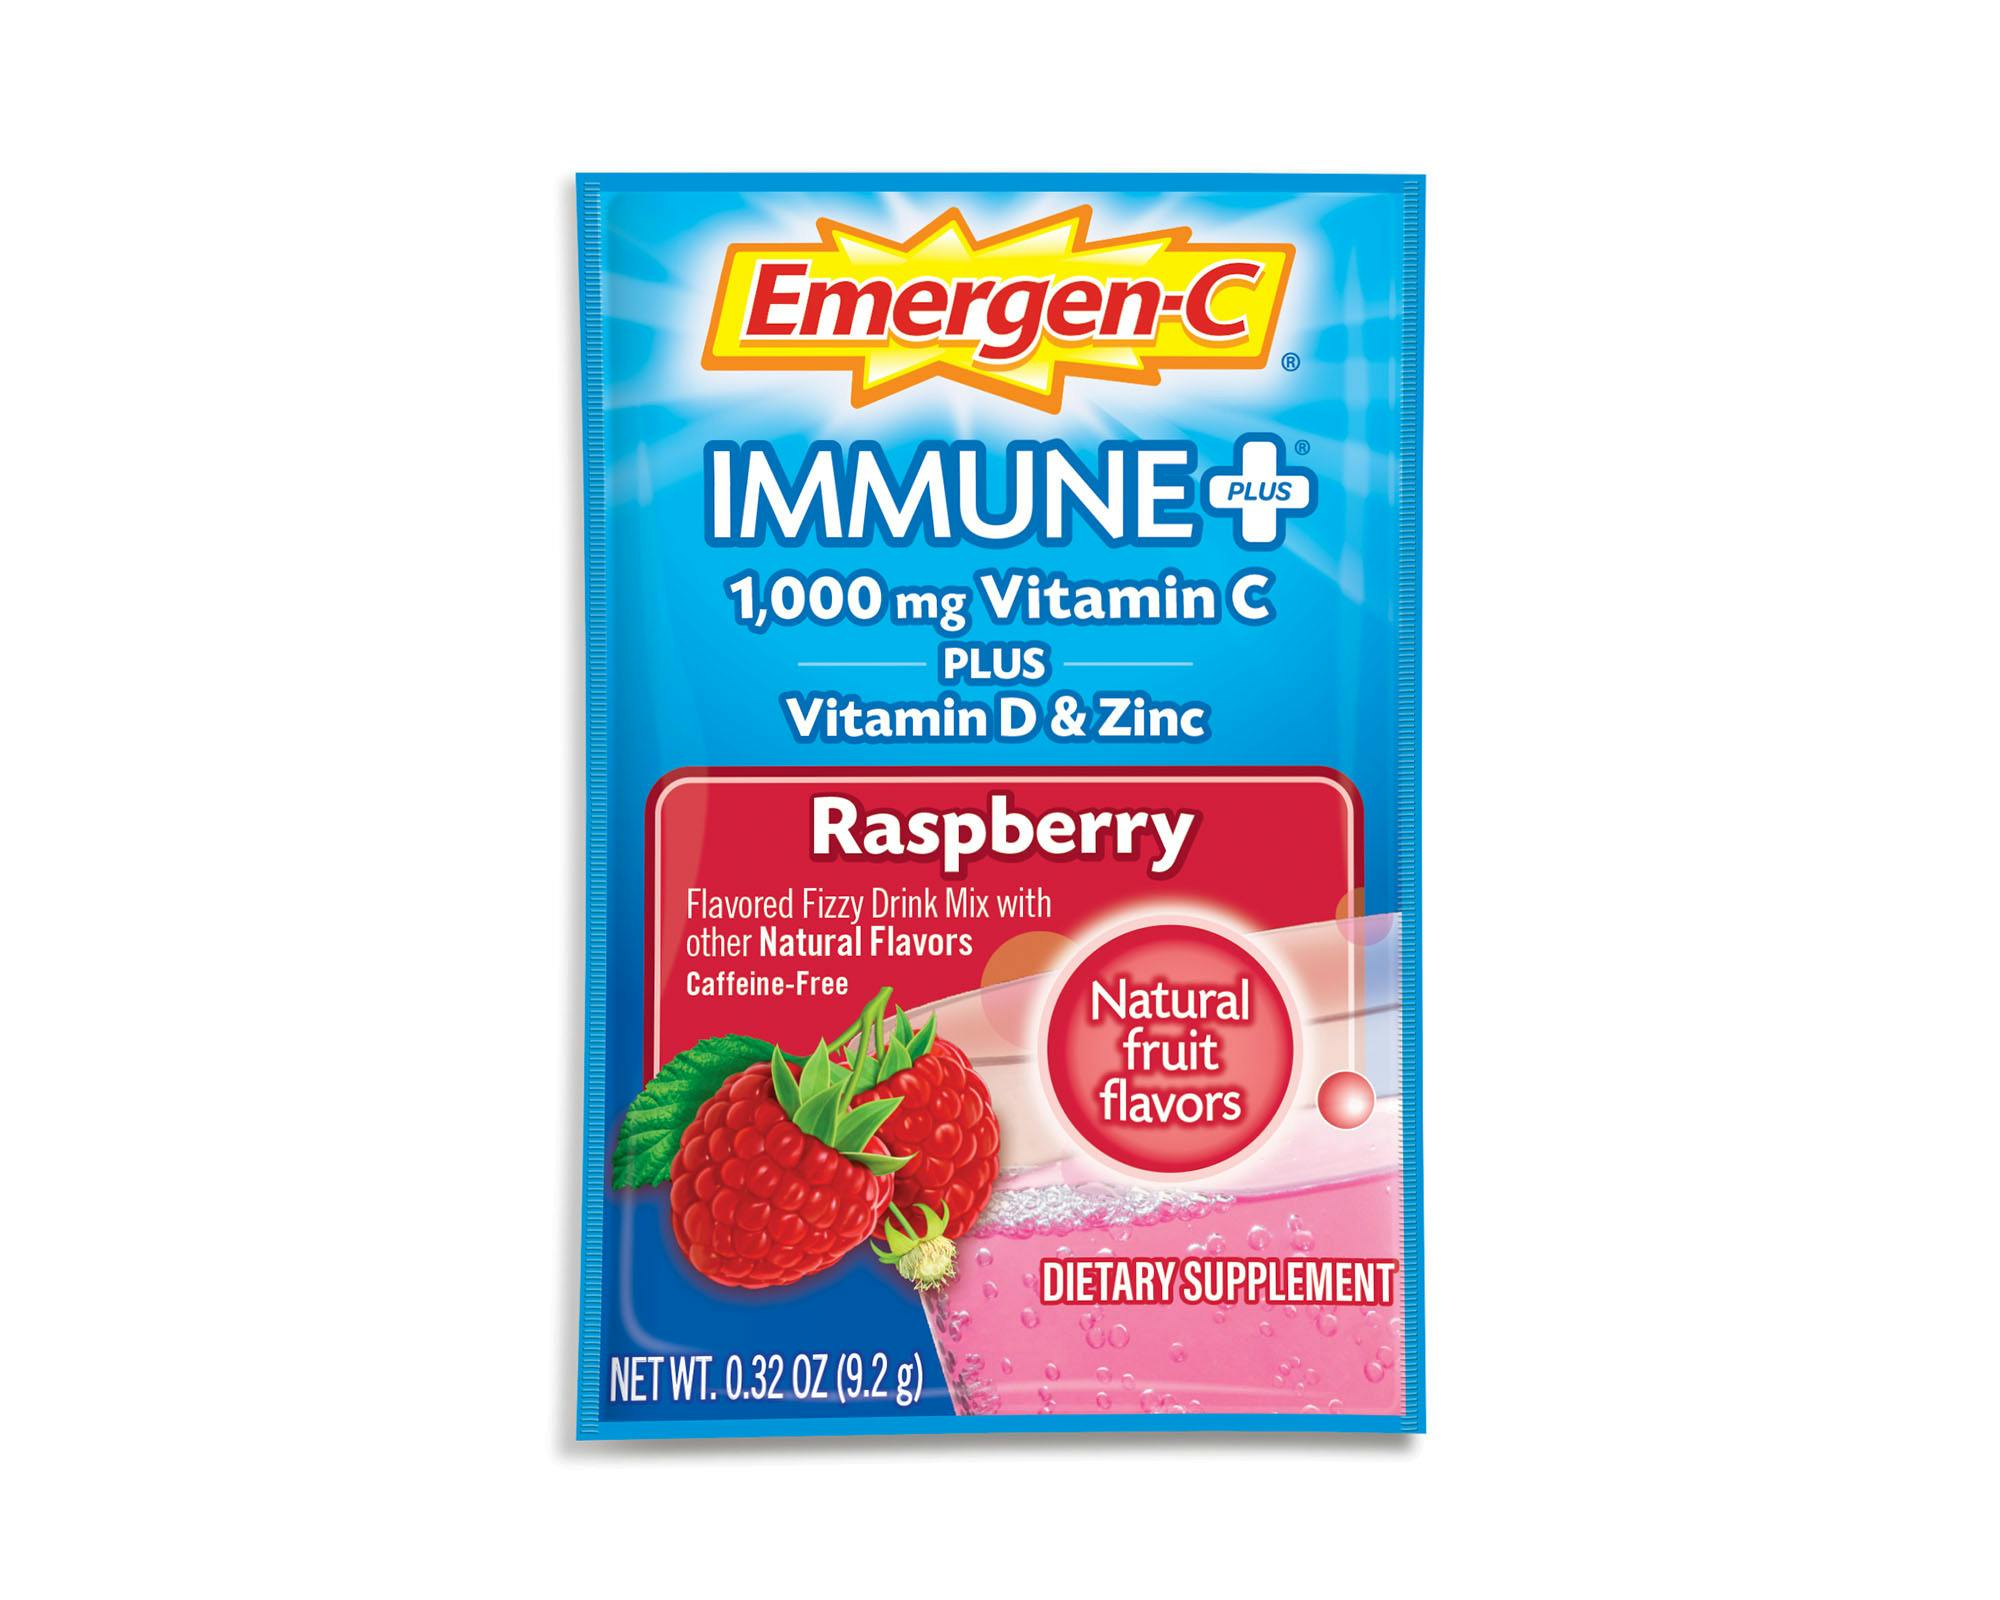 Raspberry Immune+ Support packet